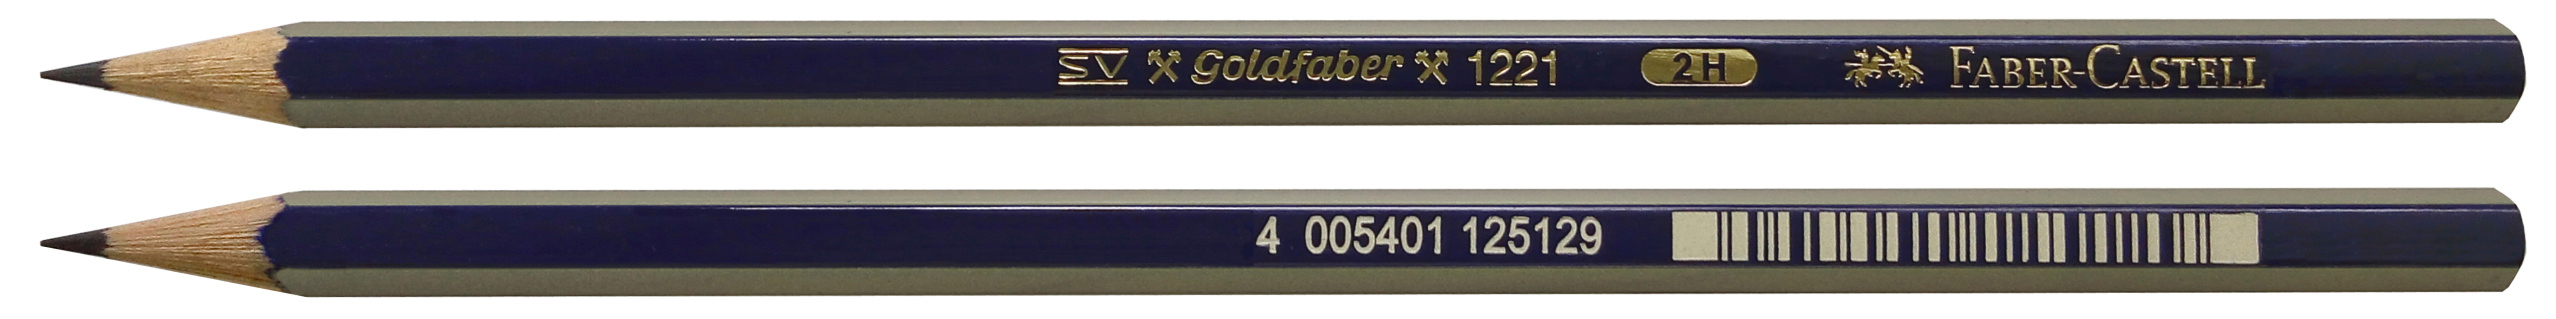 FABER-CASTELL Crayon 2H 112512 Goldfaber